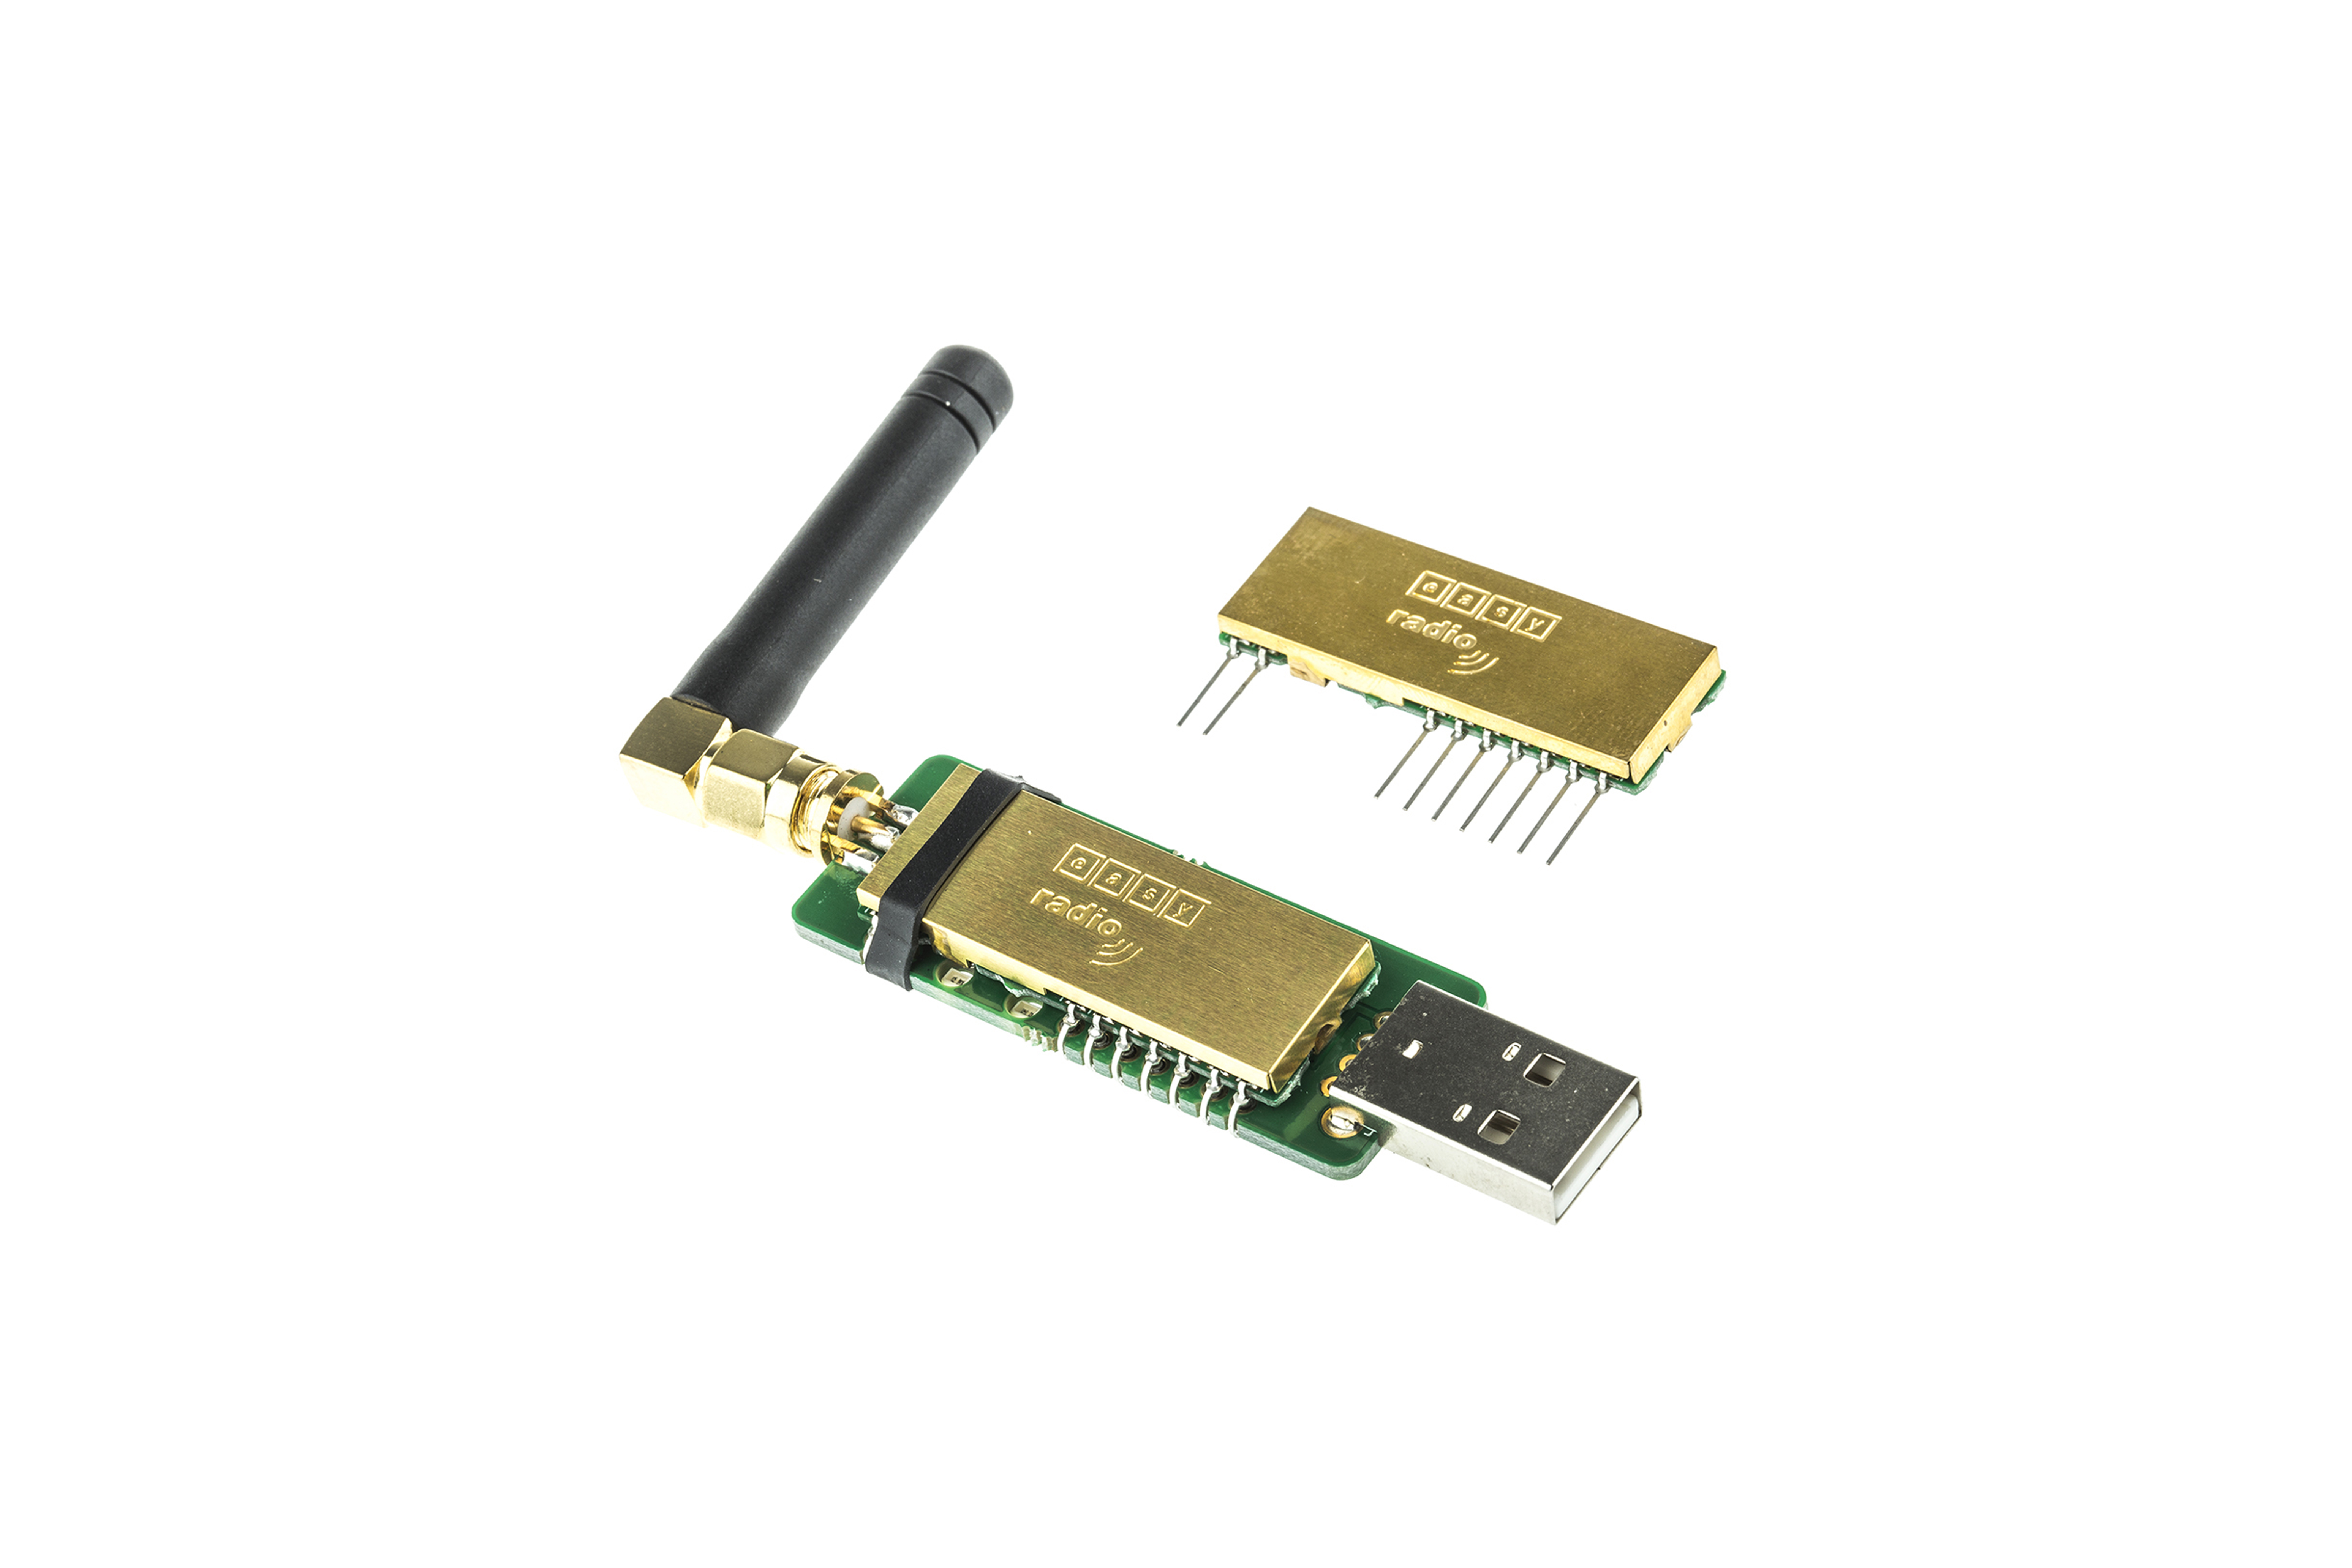 ERA900TRS EN CONNECT2-PI USB 868 MHZ KIT